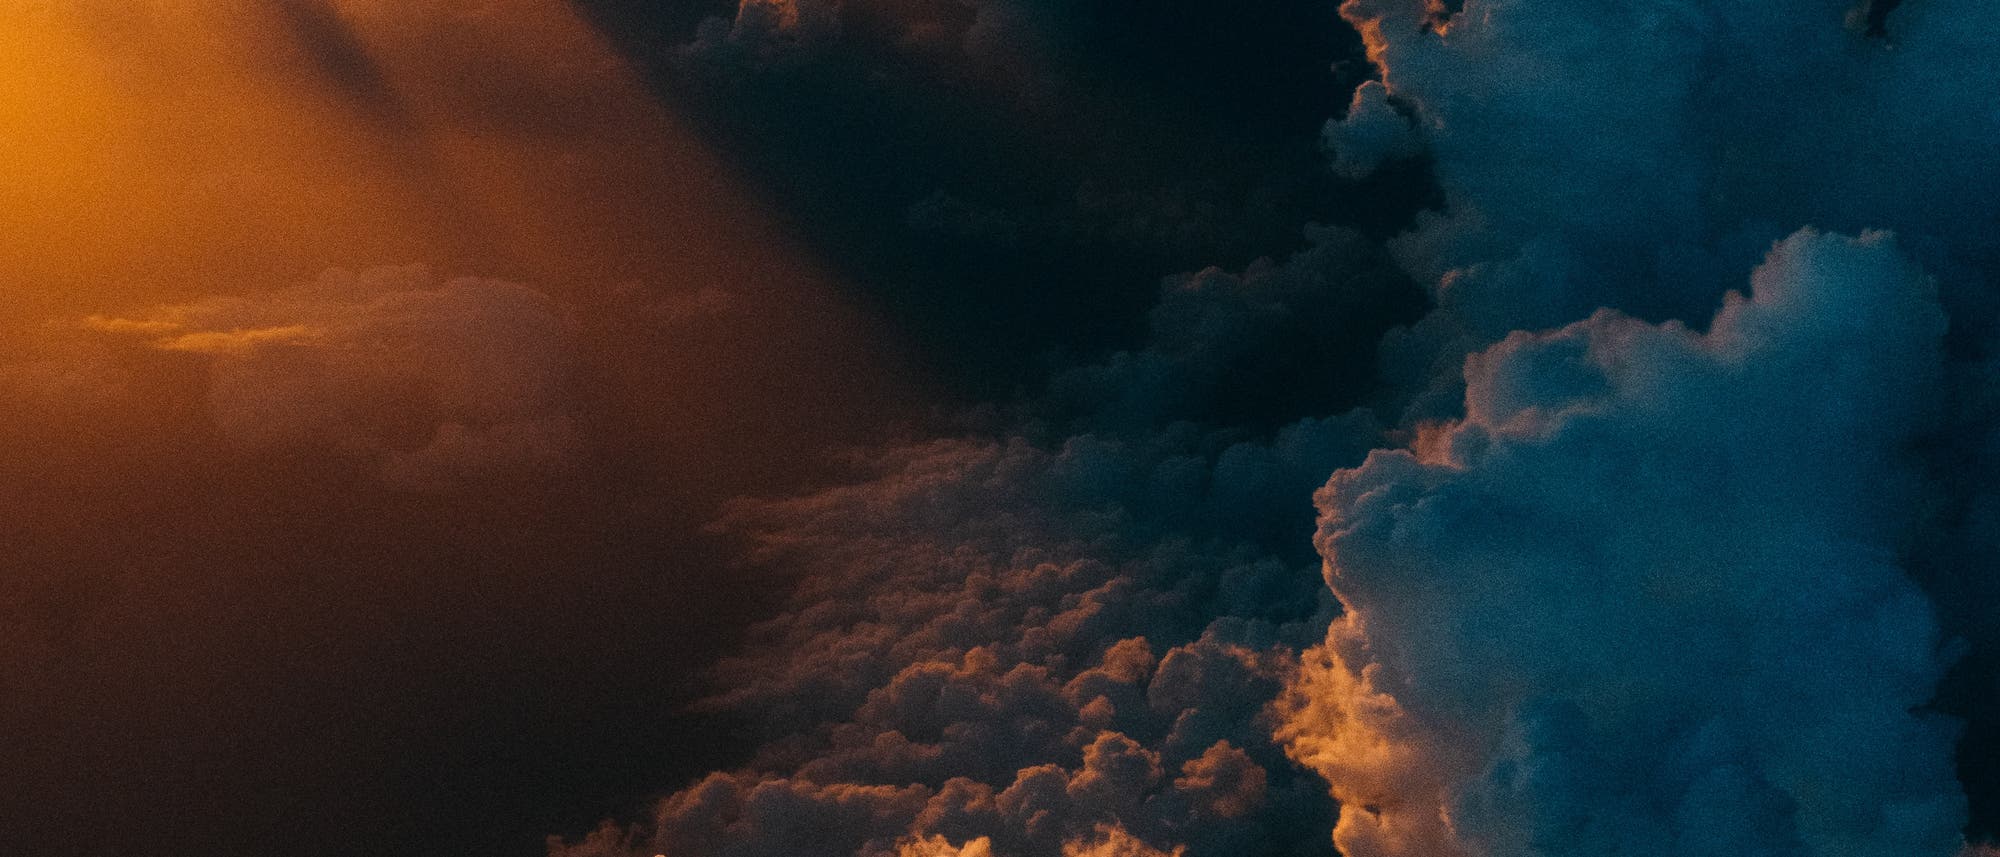 Wolken bei Sonnenuntergang